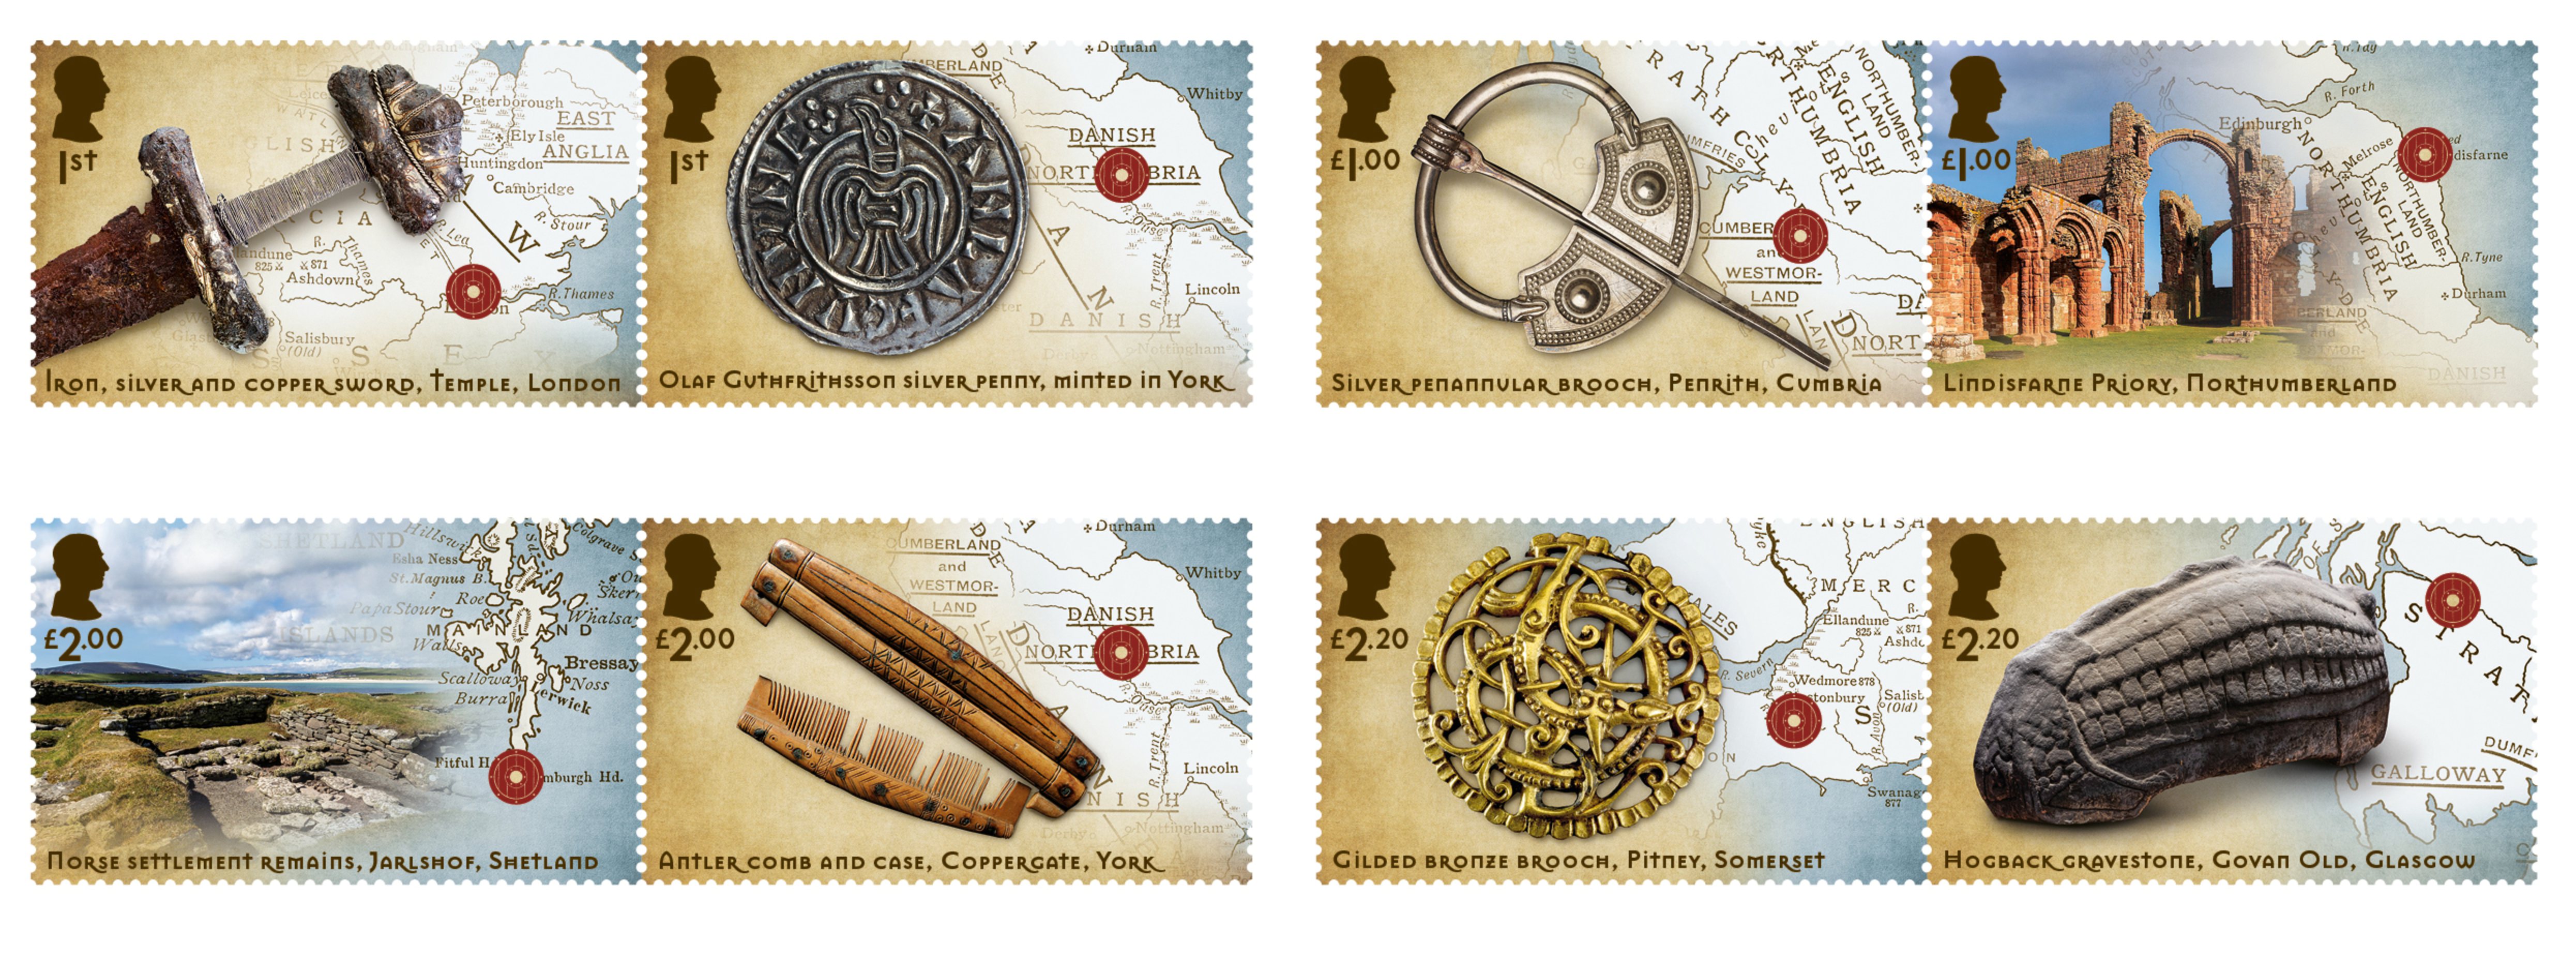 Viking Britain stamps 